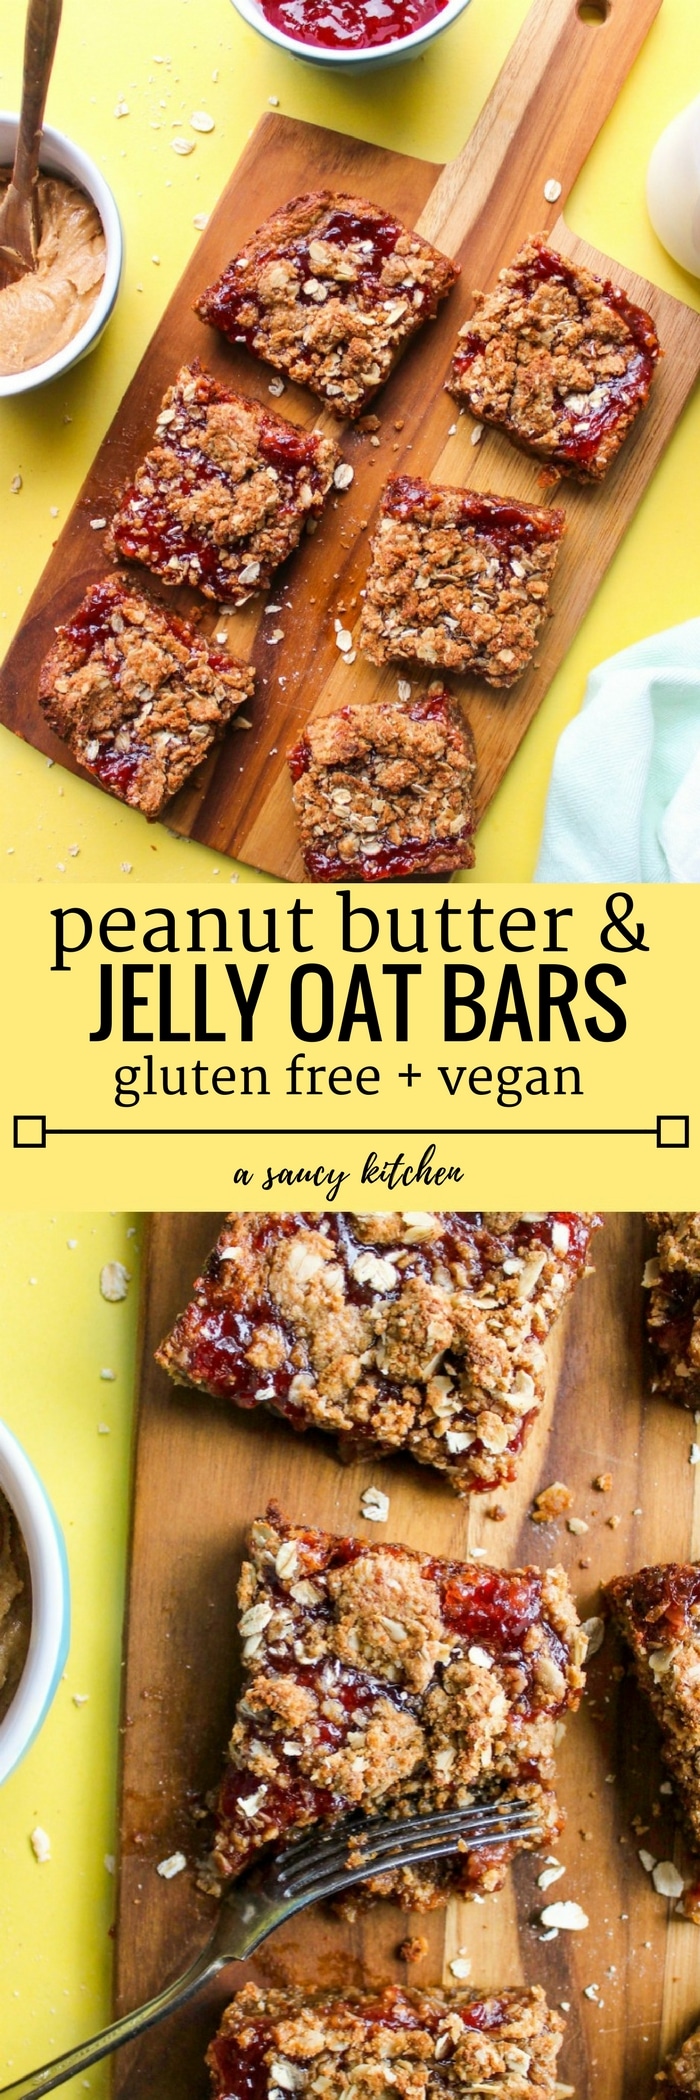 gluten free + vegan peanut butter & jelly bars